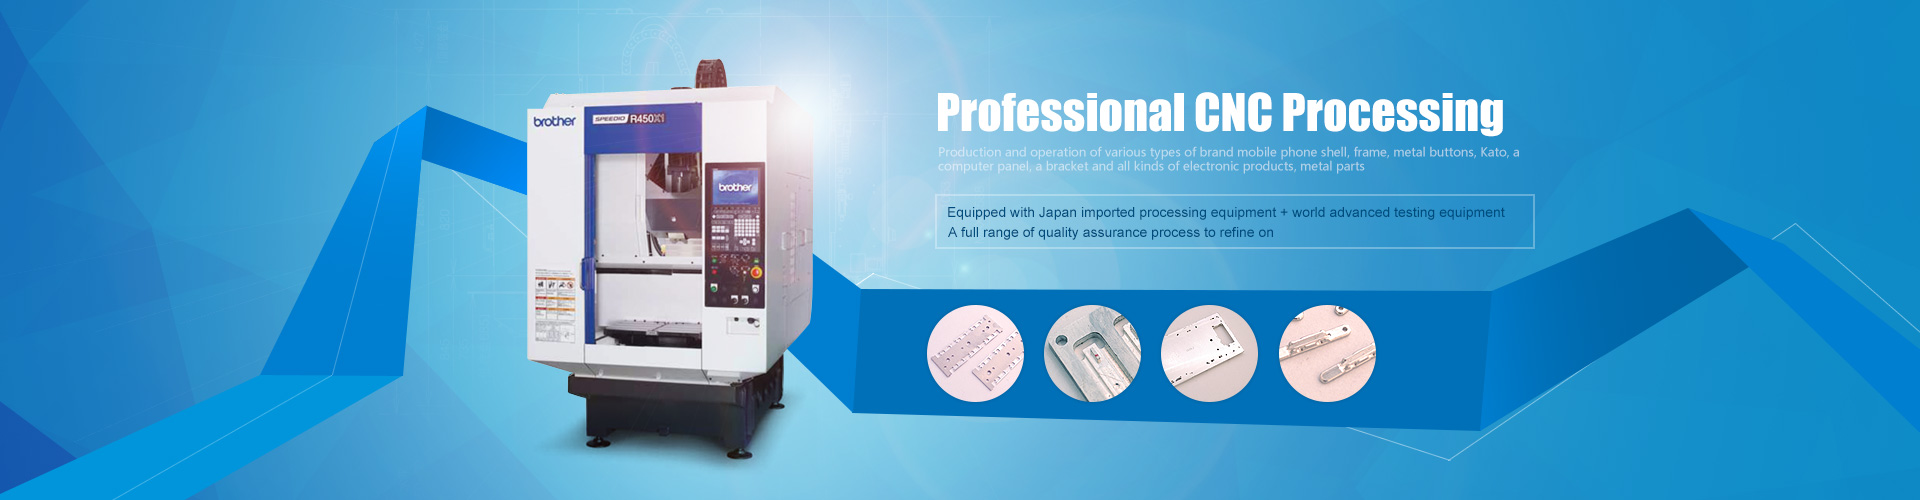 Professional CNC processing